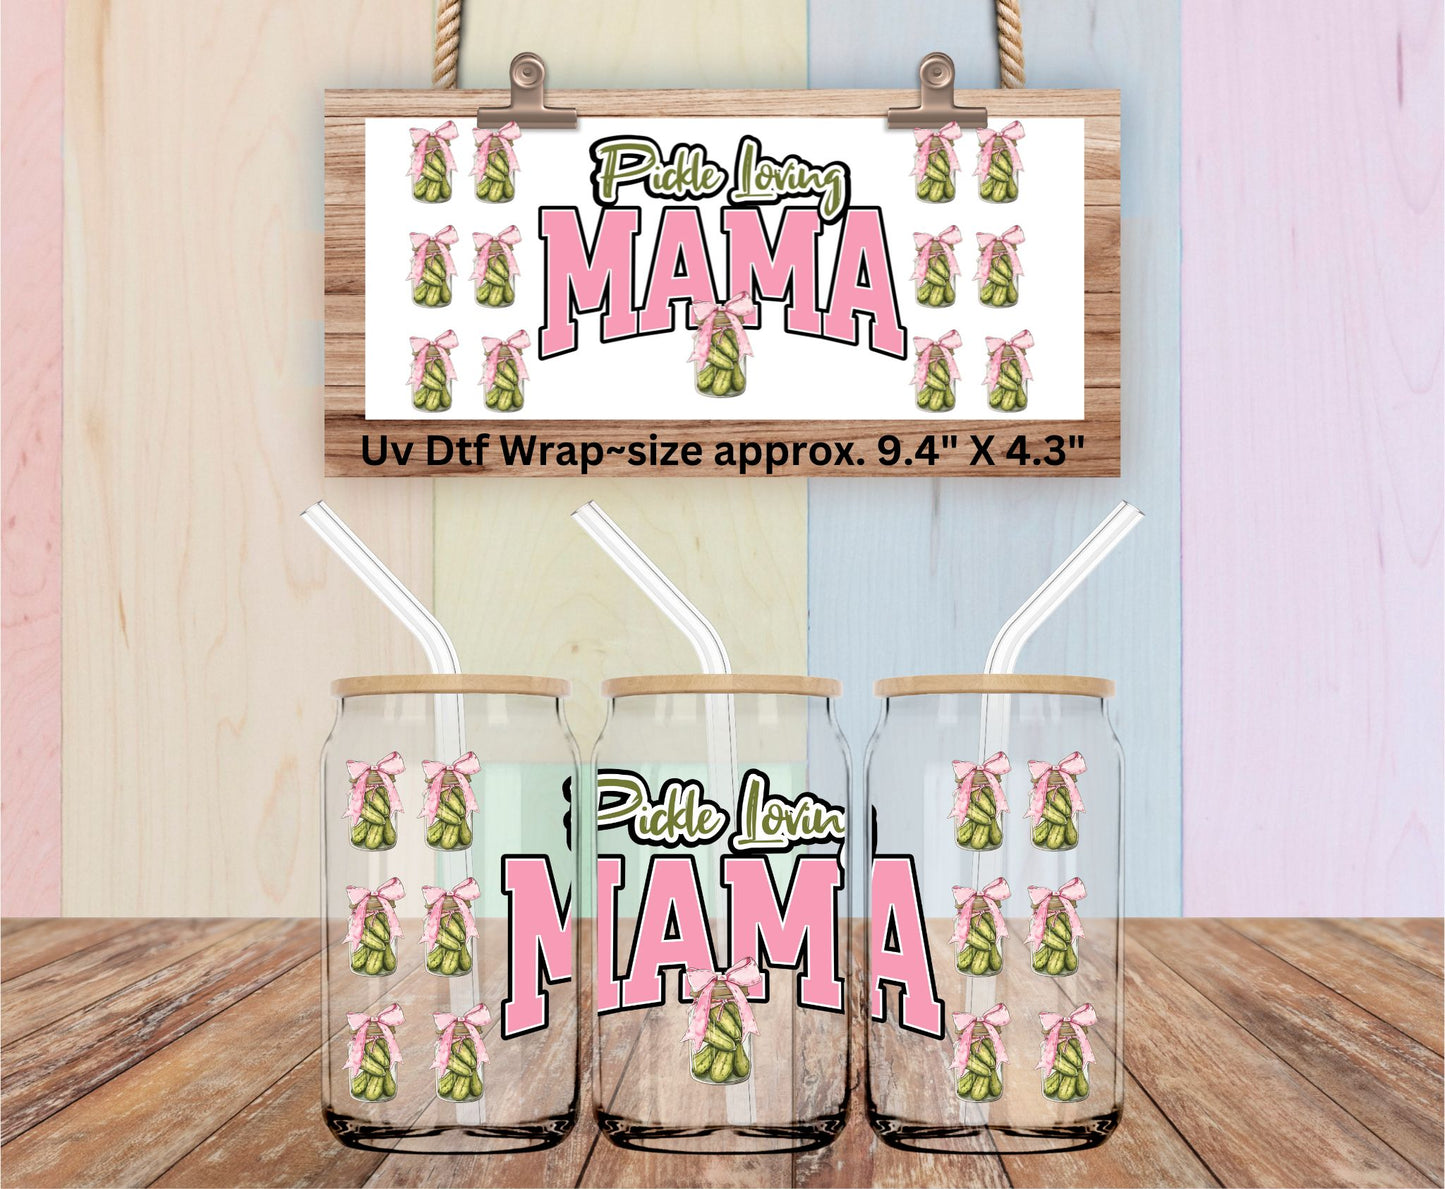 Uv Dtf Wrap Pickle Loving MAMA